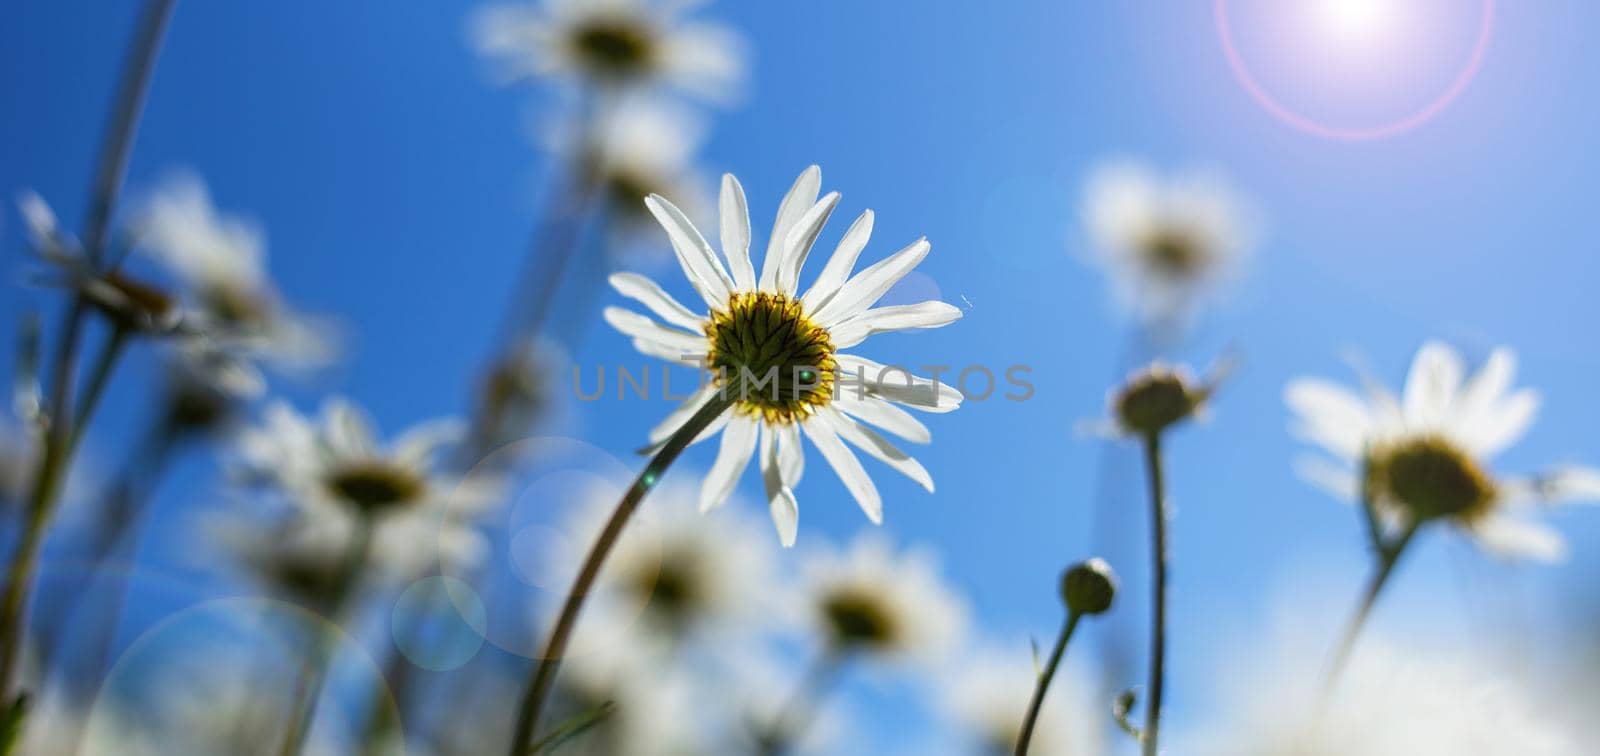 Summer daisy flowers by NelliPolk